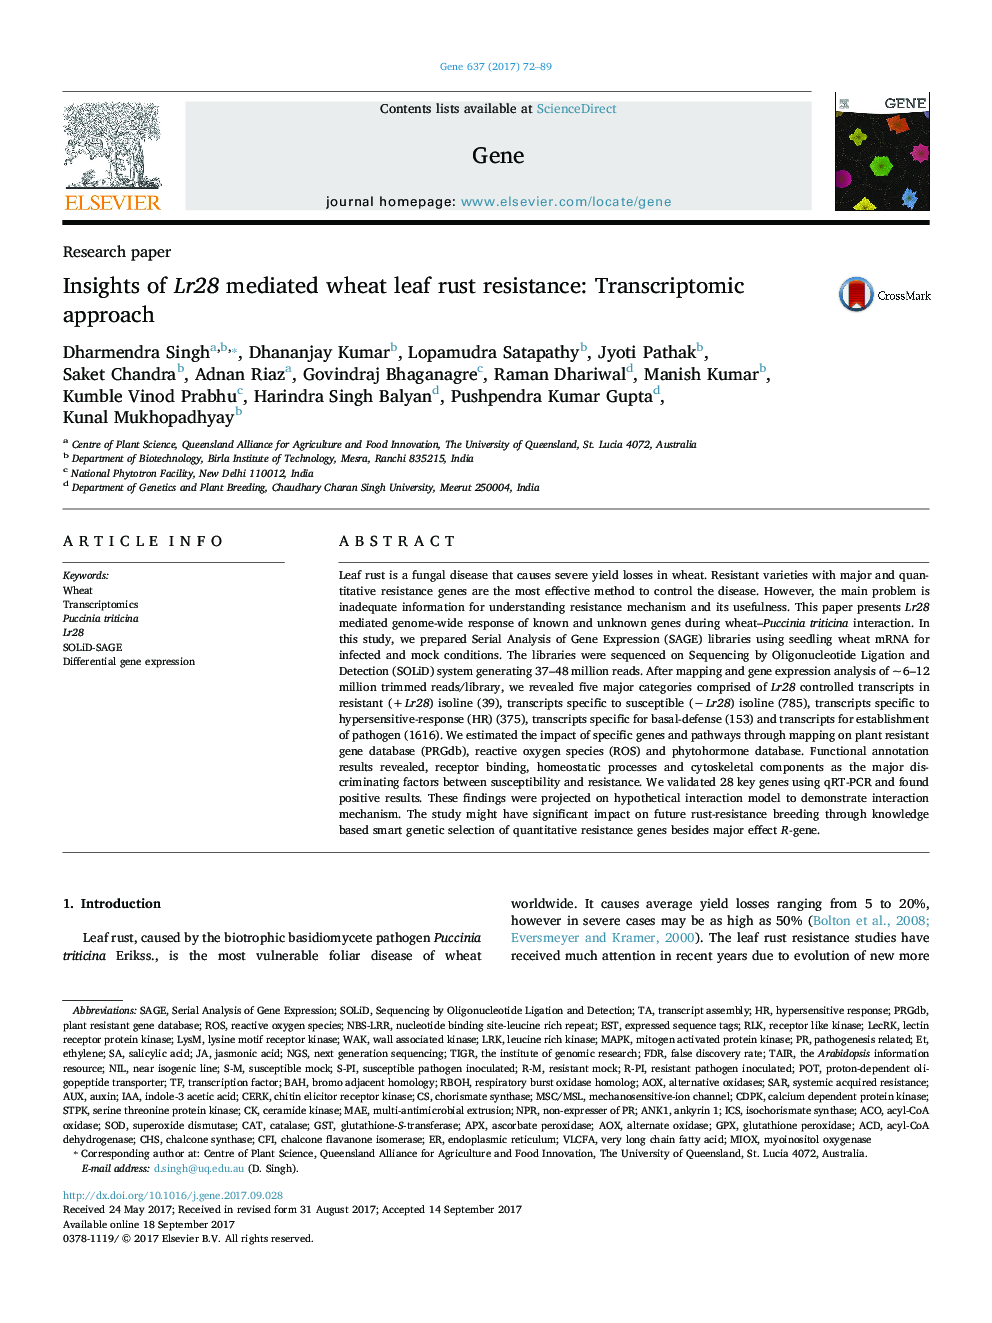 Insights of Lr28 mediated wheat leaf rust resistance: Transcriptomic approach